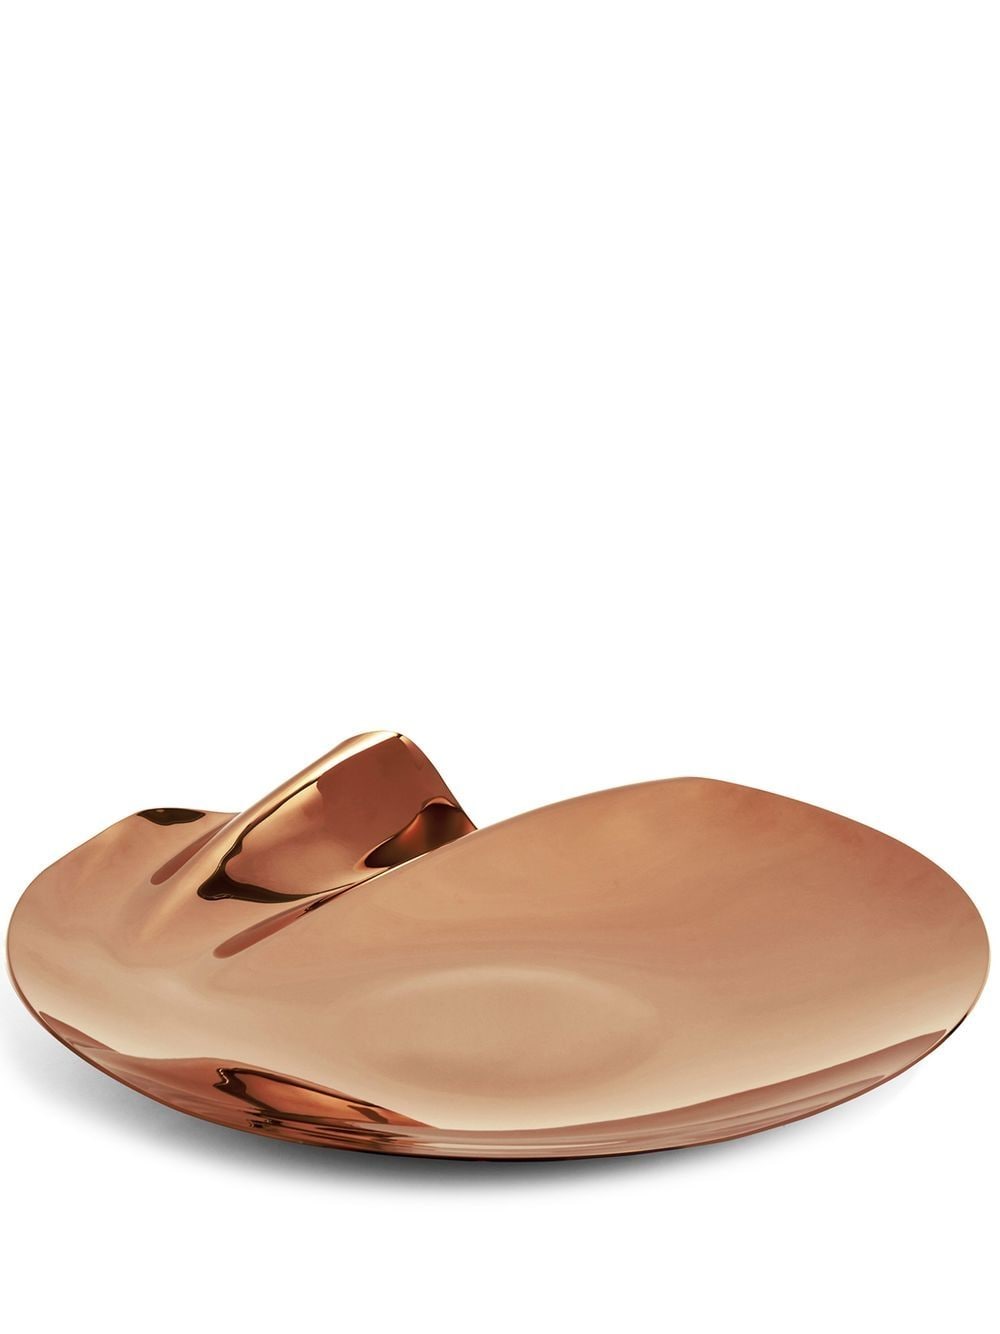 Shop Zaha Hadid Design Serenity Stainless Steel Platter In Brown